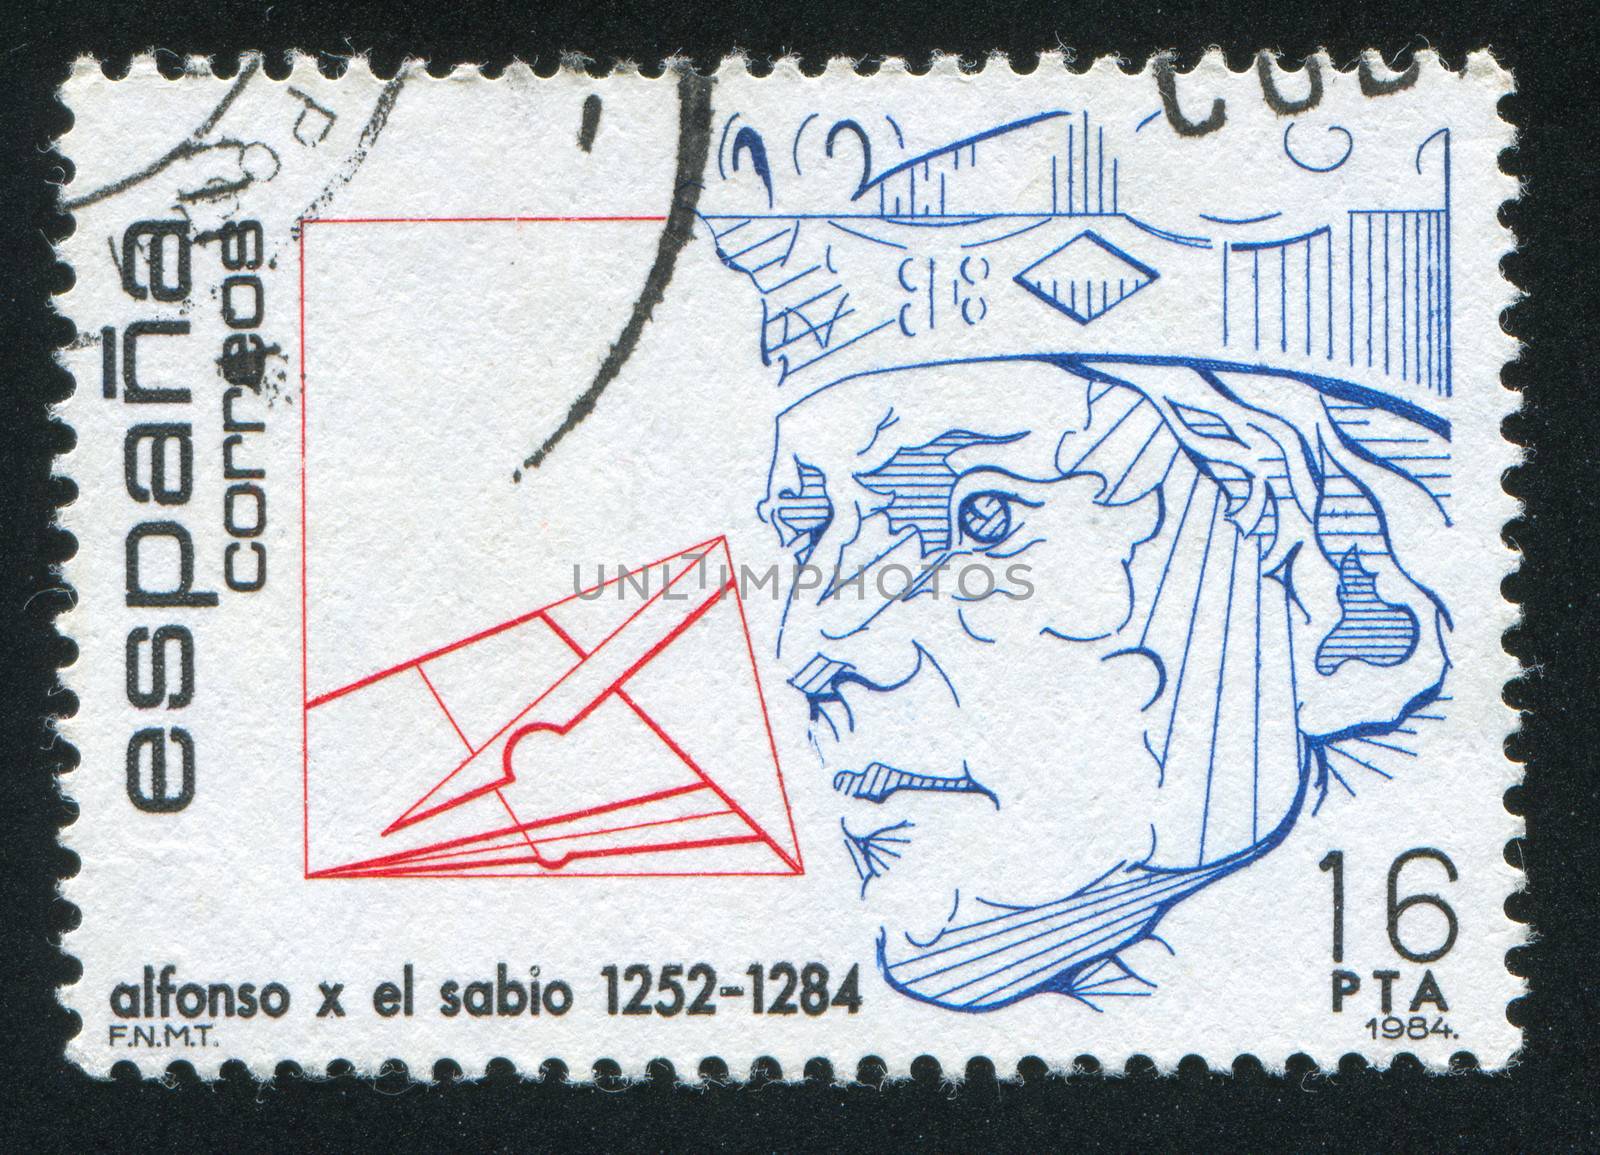 SPAIN - CIRCA 1984: stamp printed by Spain, shows King Alfonso X (1252-1284), circa 1984